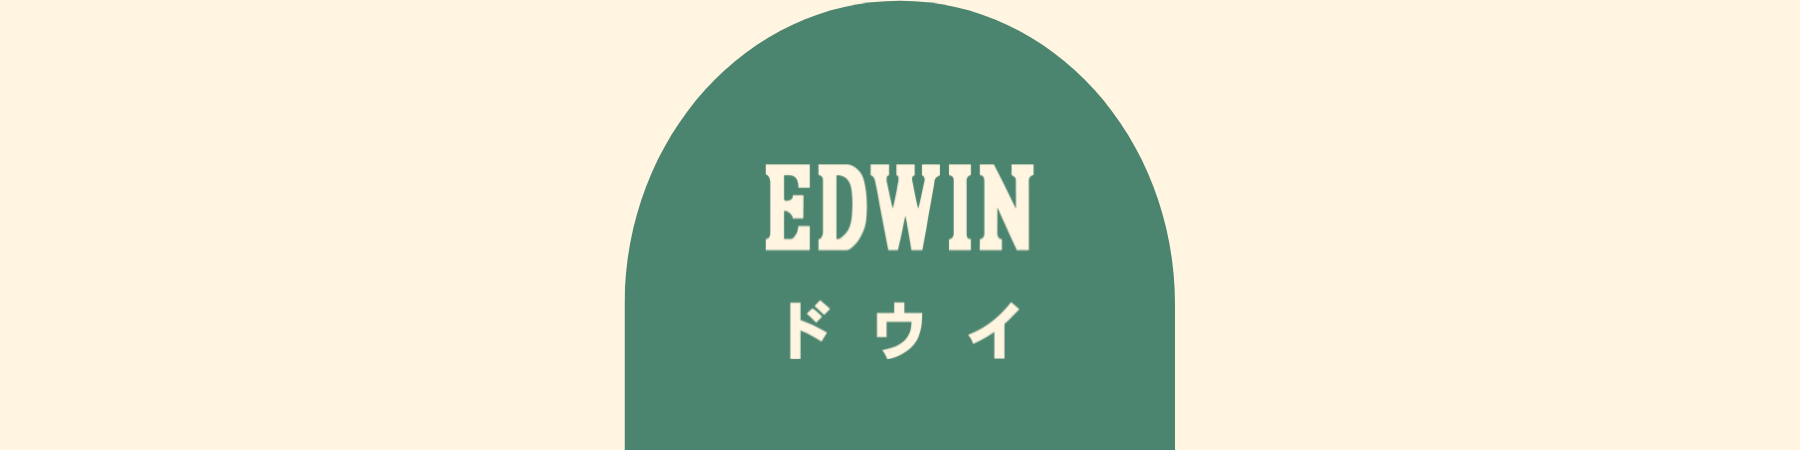 Men's Edwin | The Local Merchants